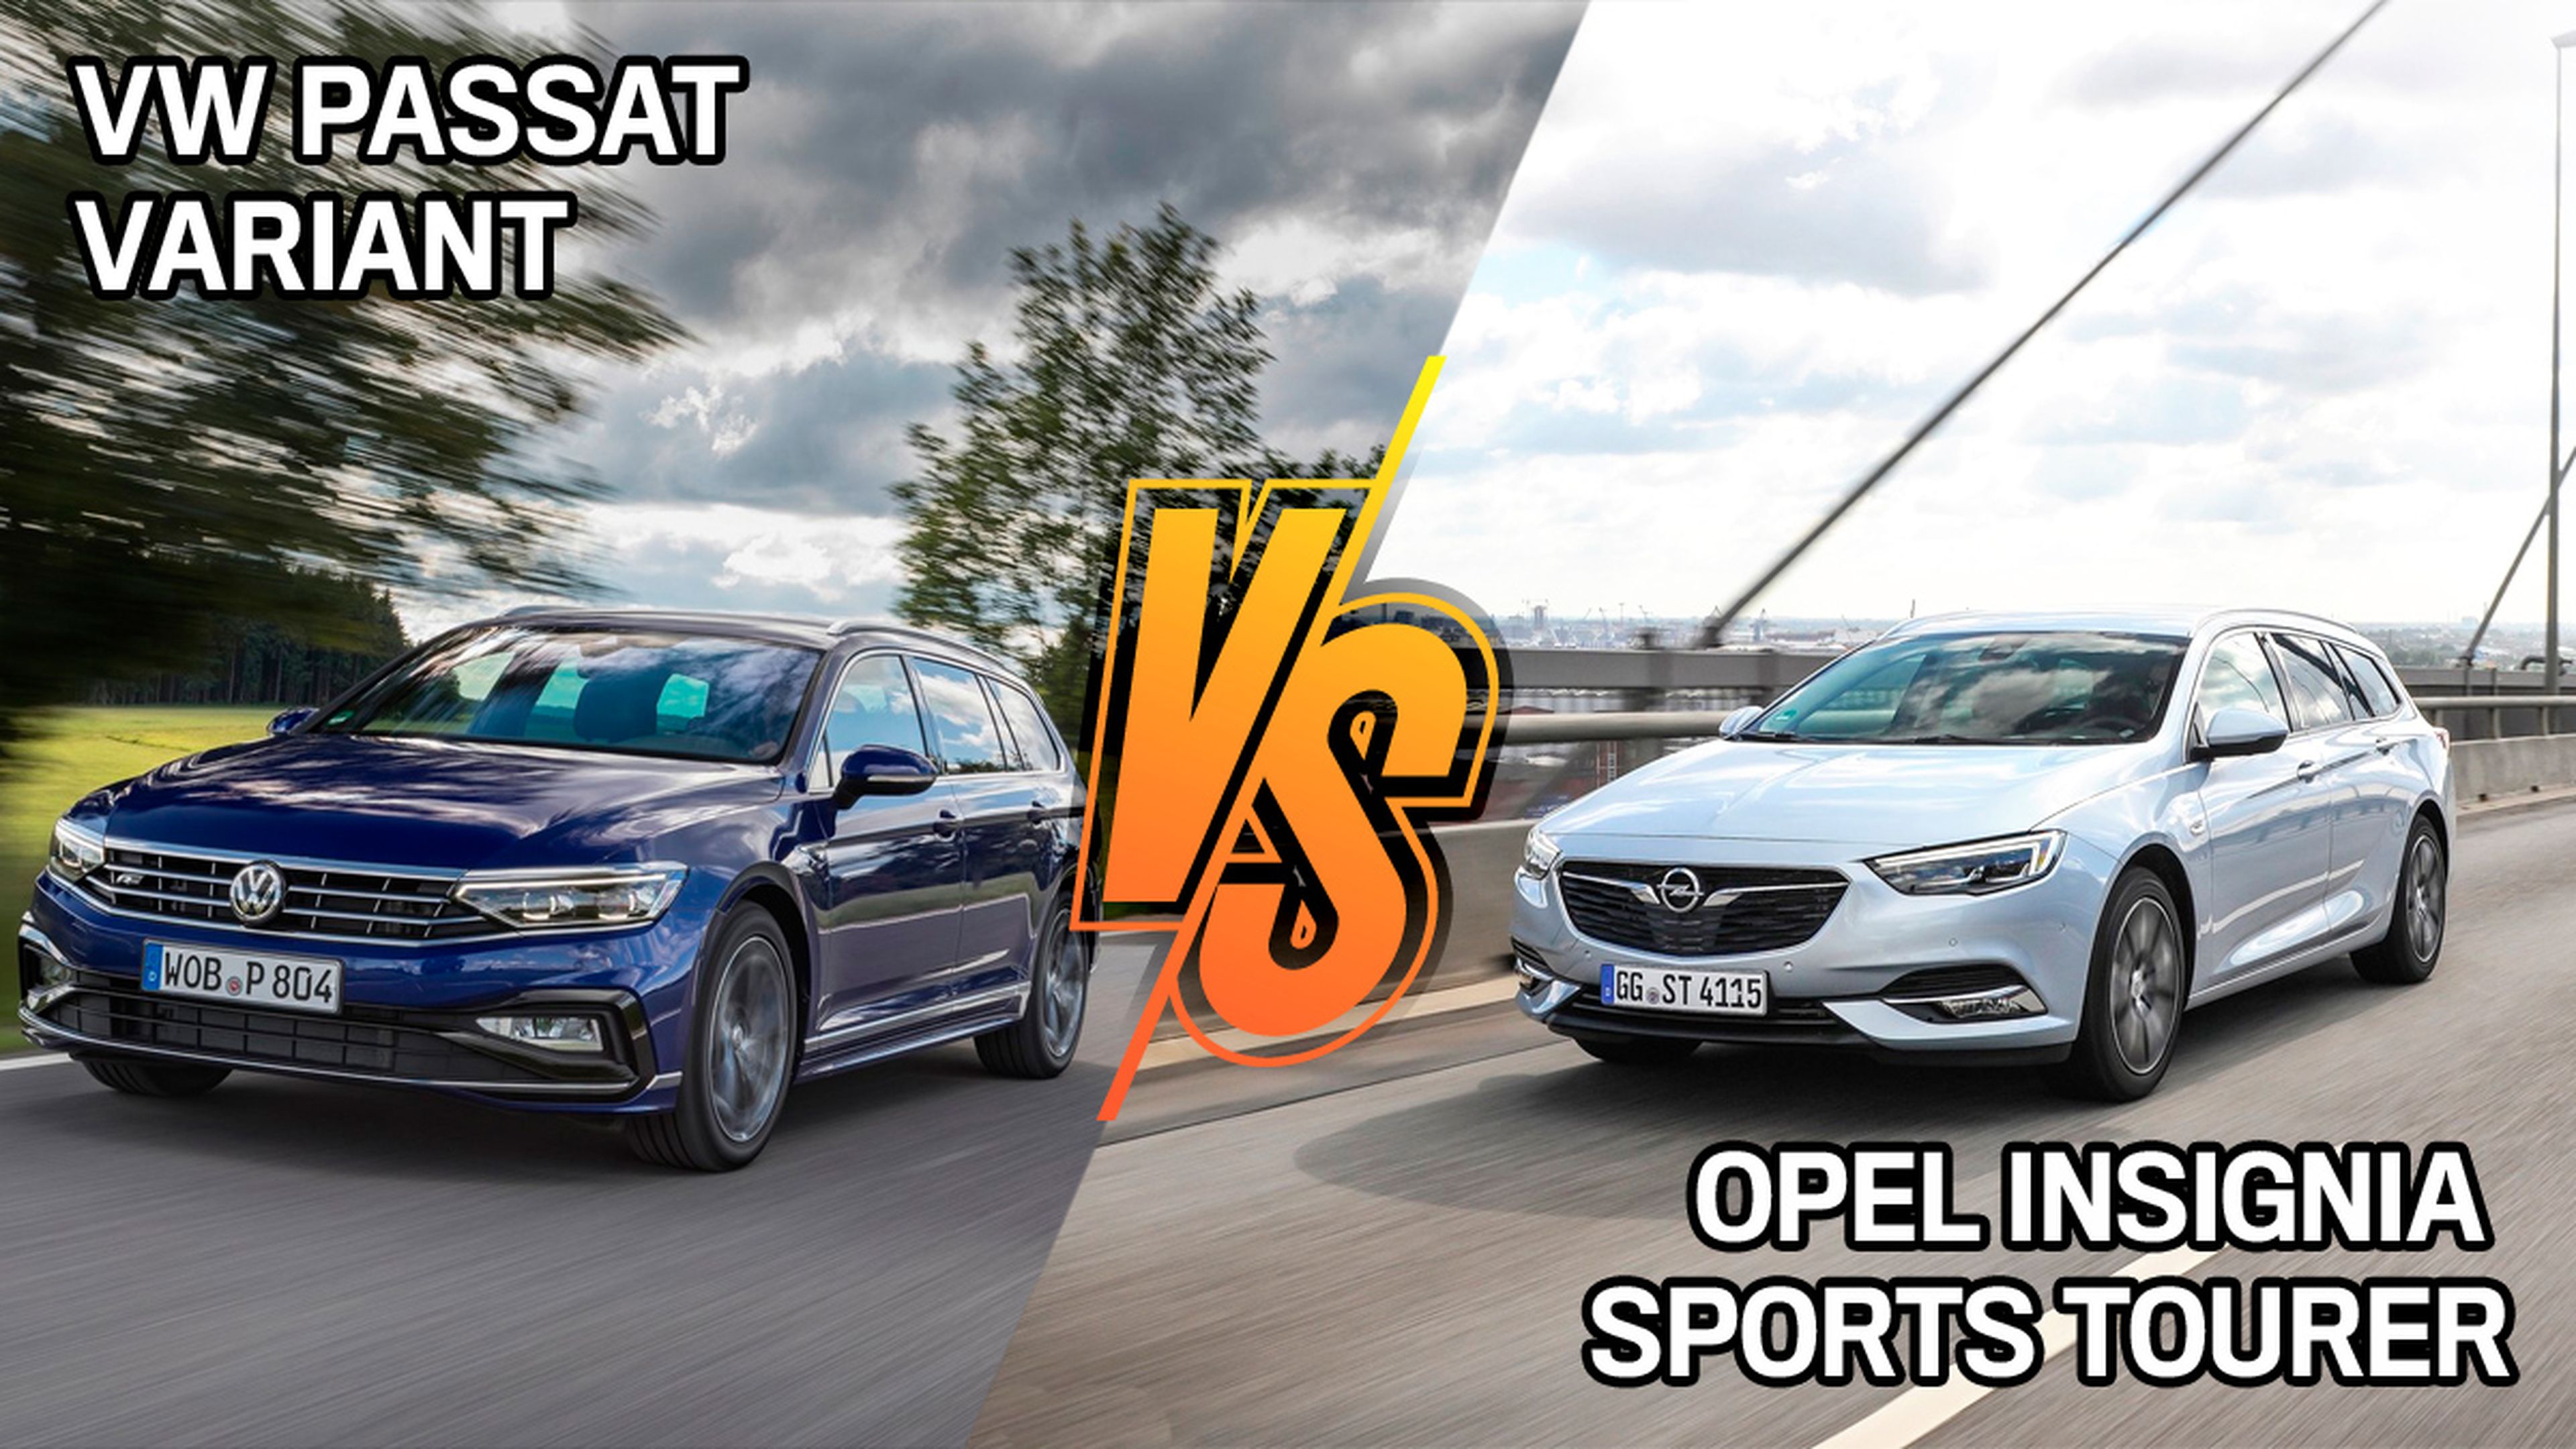 Opel Insignia Sports Tourer o VW Passat Variant 2021, ¿cuál es mejor?